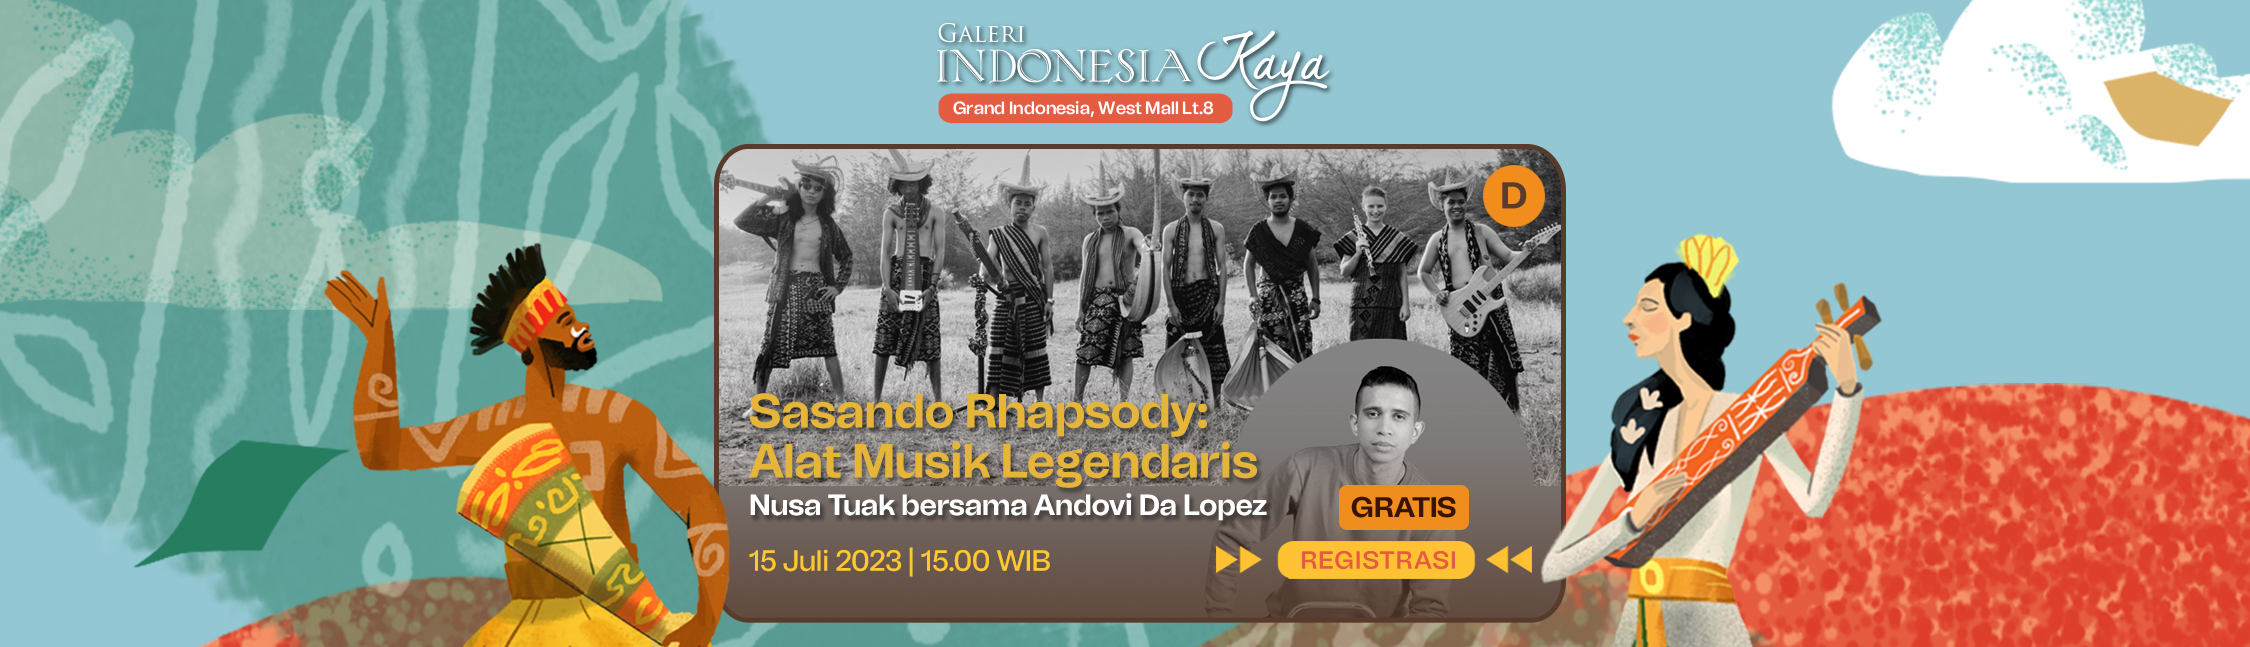 Sasando Rhapsody : Alat Musik Legendaris oleh Nusa Tuak bersama Andovi da Lopez